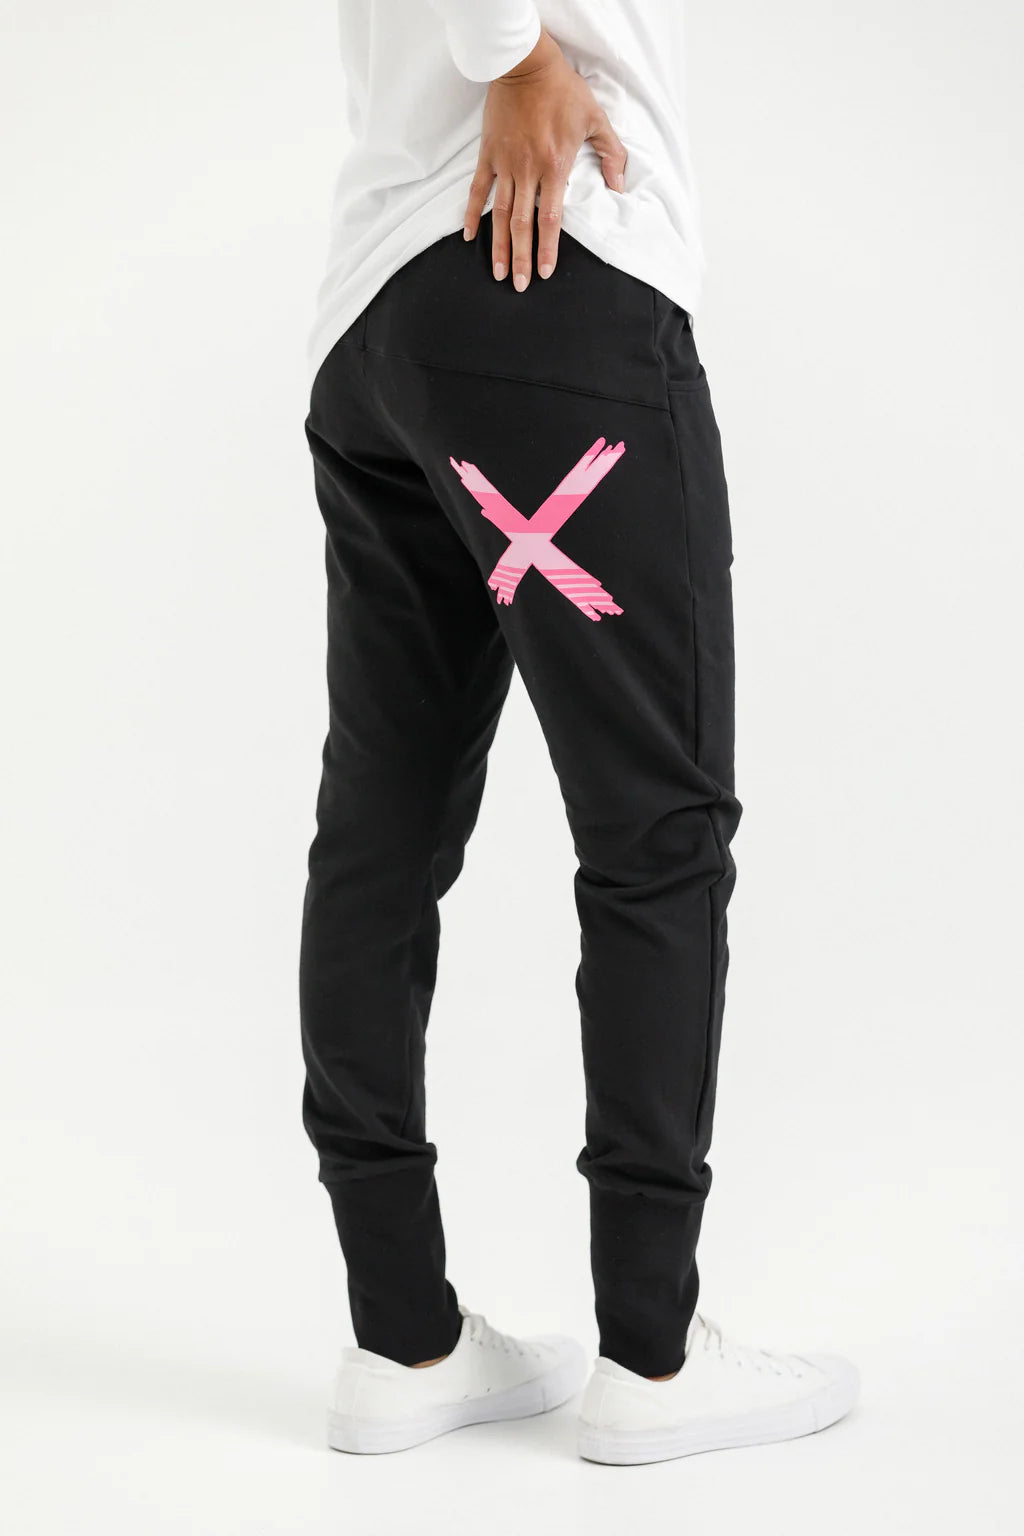 Homelee | Apartment Pants Winter - Black with Irregular Pink Stripe X